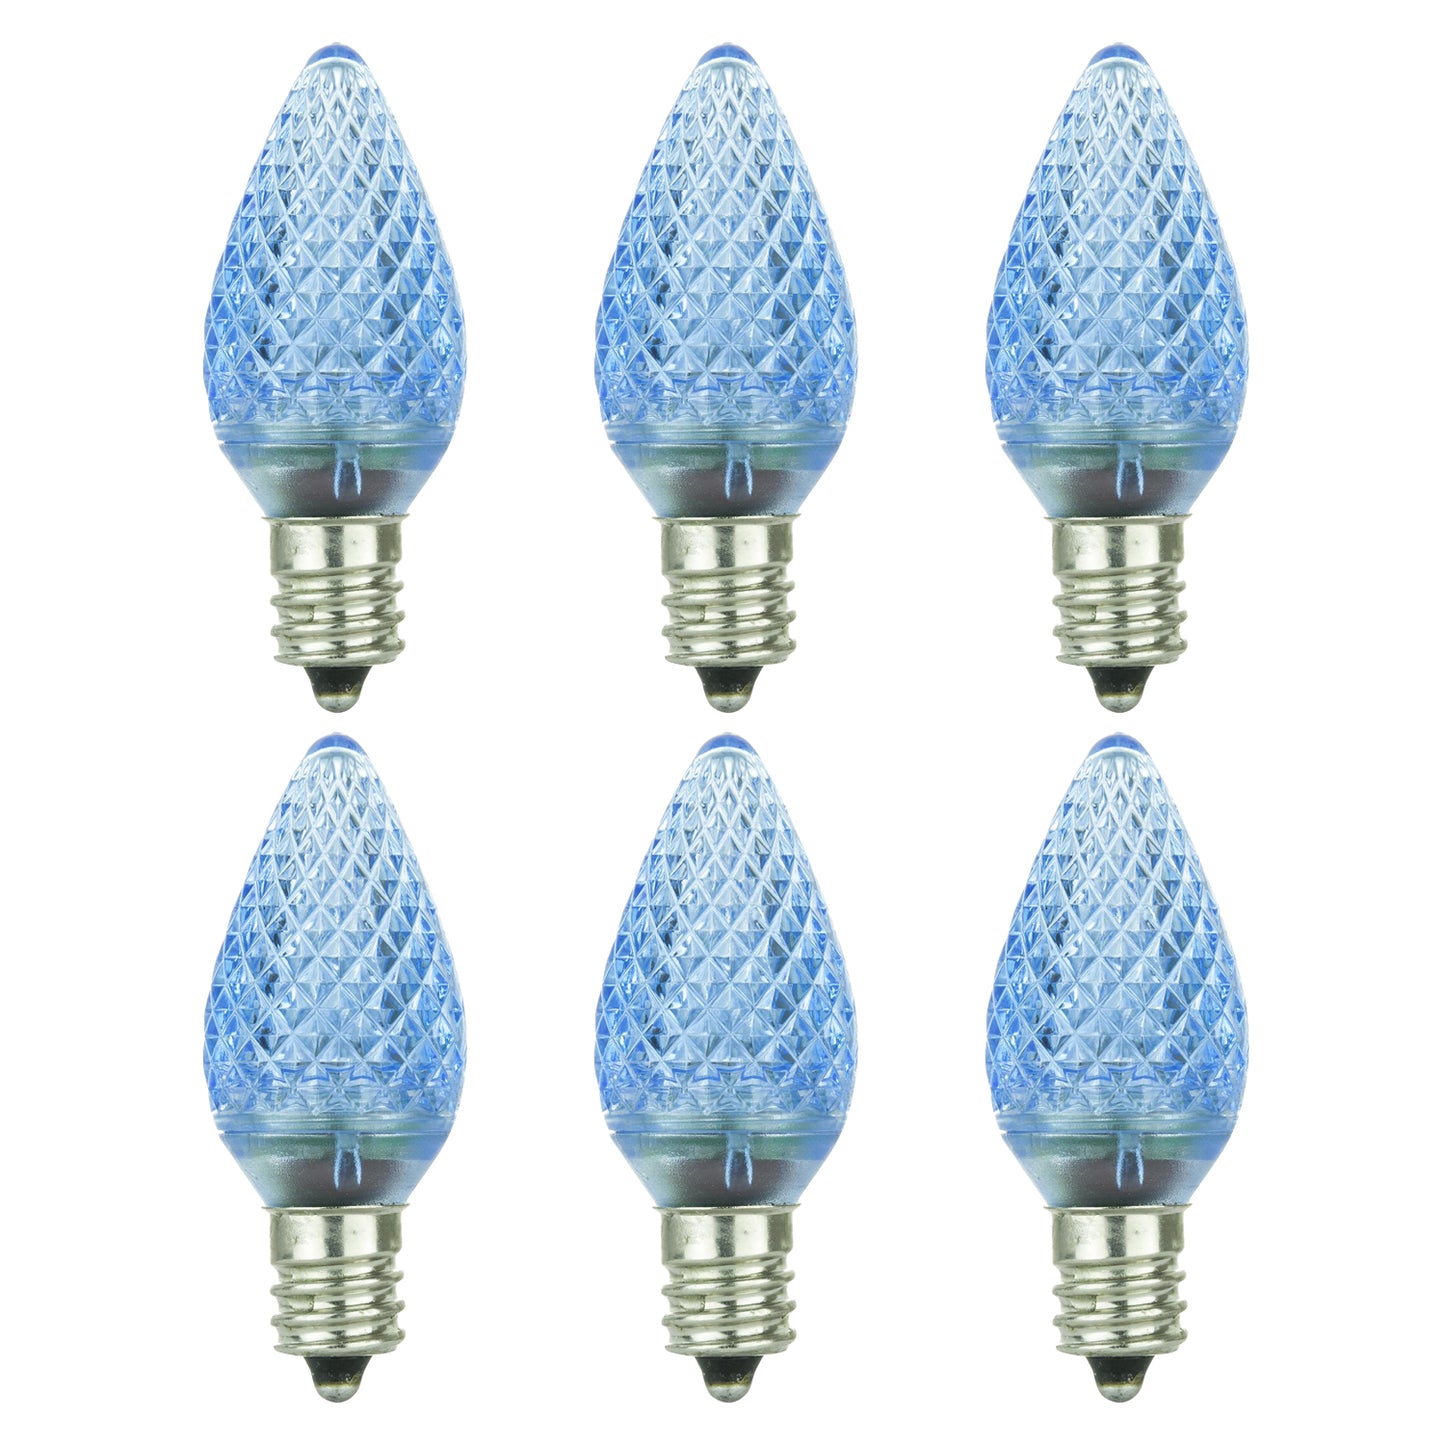 Sunlite LED C7 0.4W Blue Colored Decorative Chandelier Light Bulbs, Candelabra (E12) Base